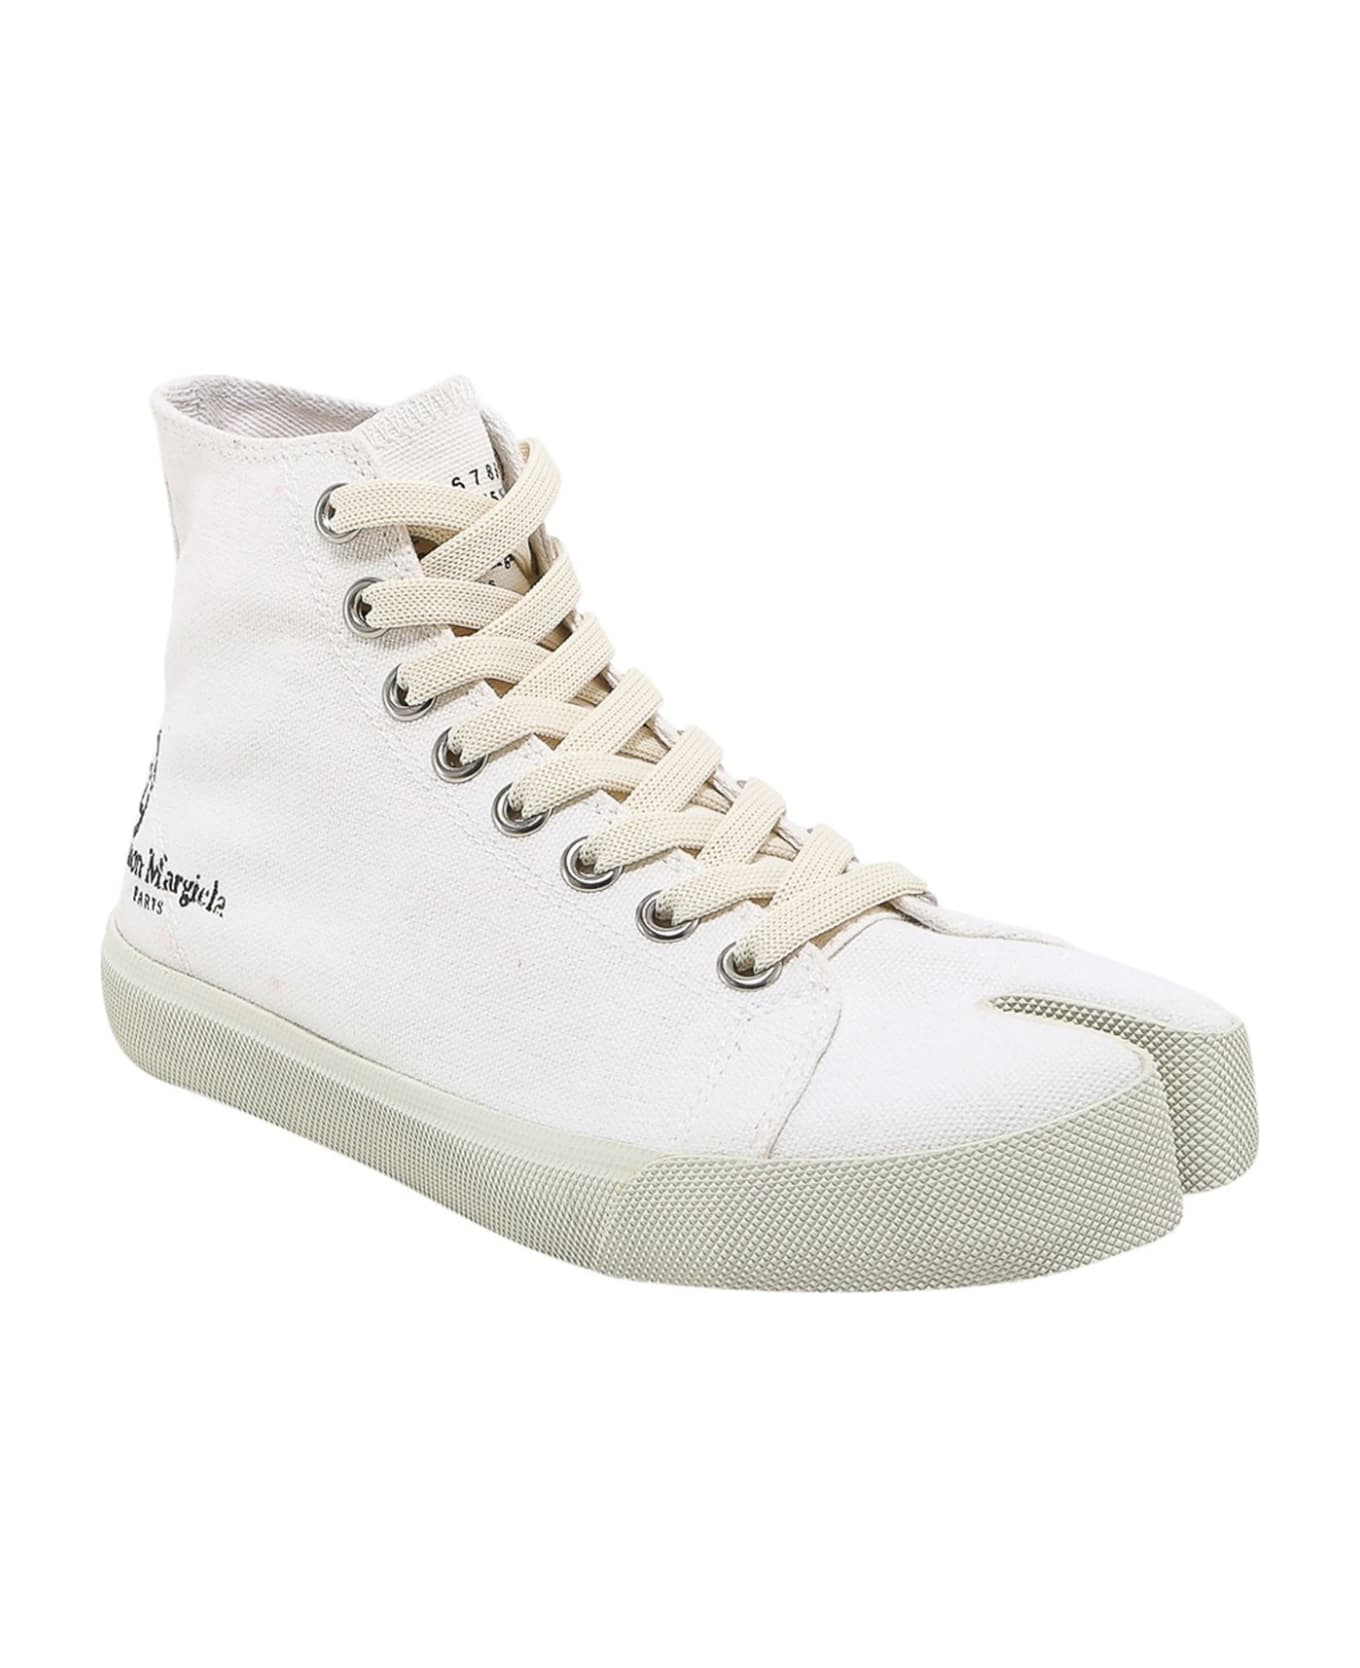 Maison Margiela Tabi High-top Sneakers - White